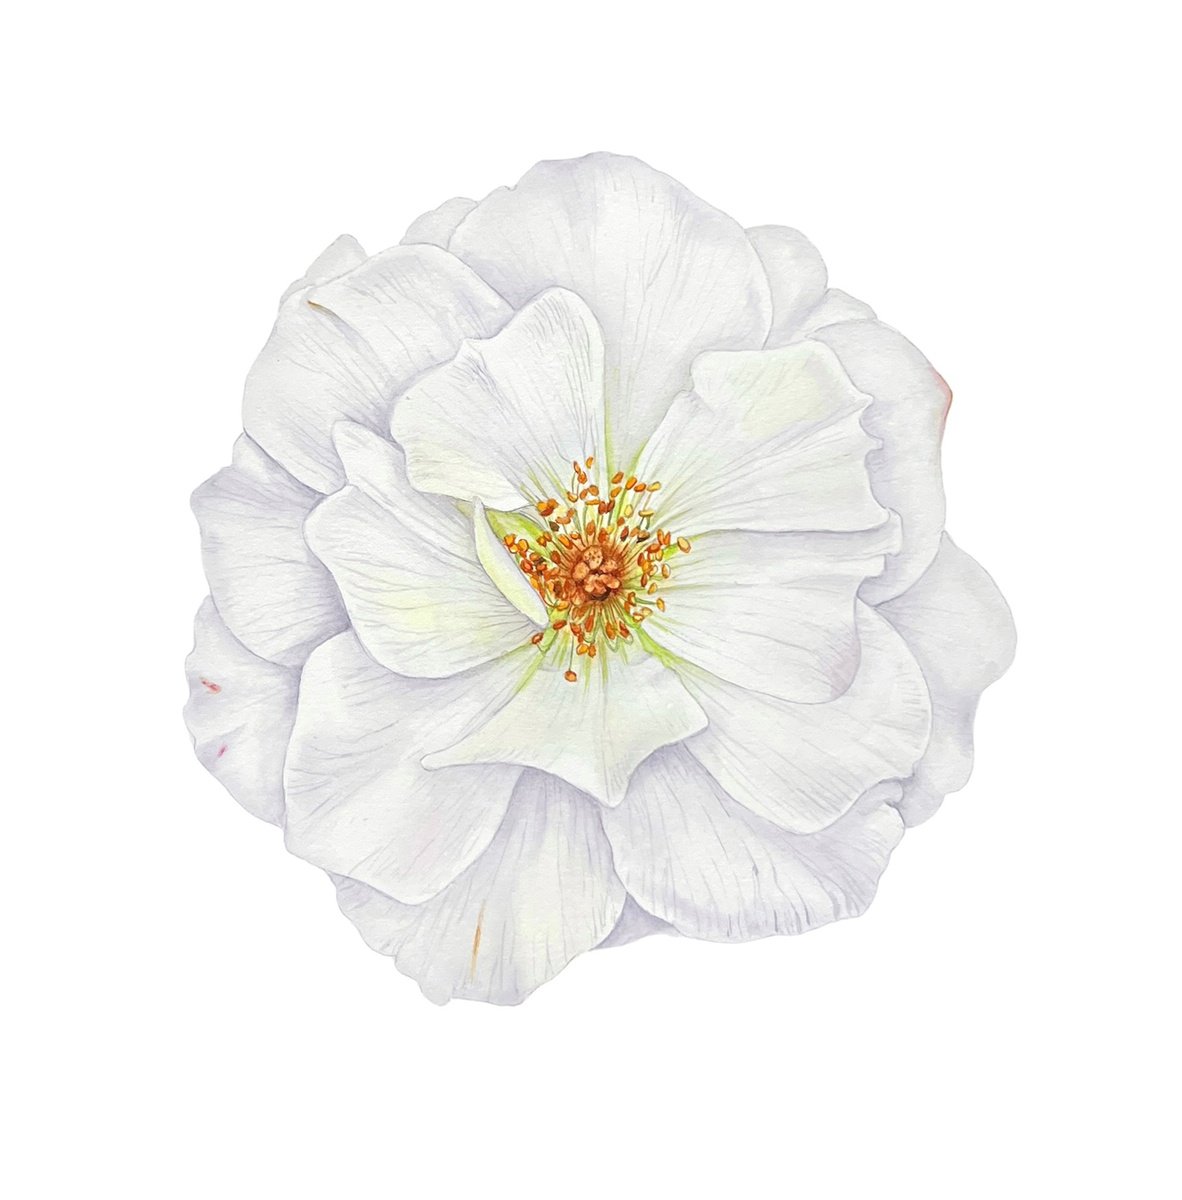 White rose. Original watercolor artwork. by Nataliia Kupchyk